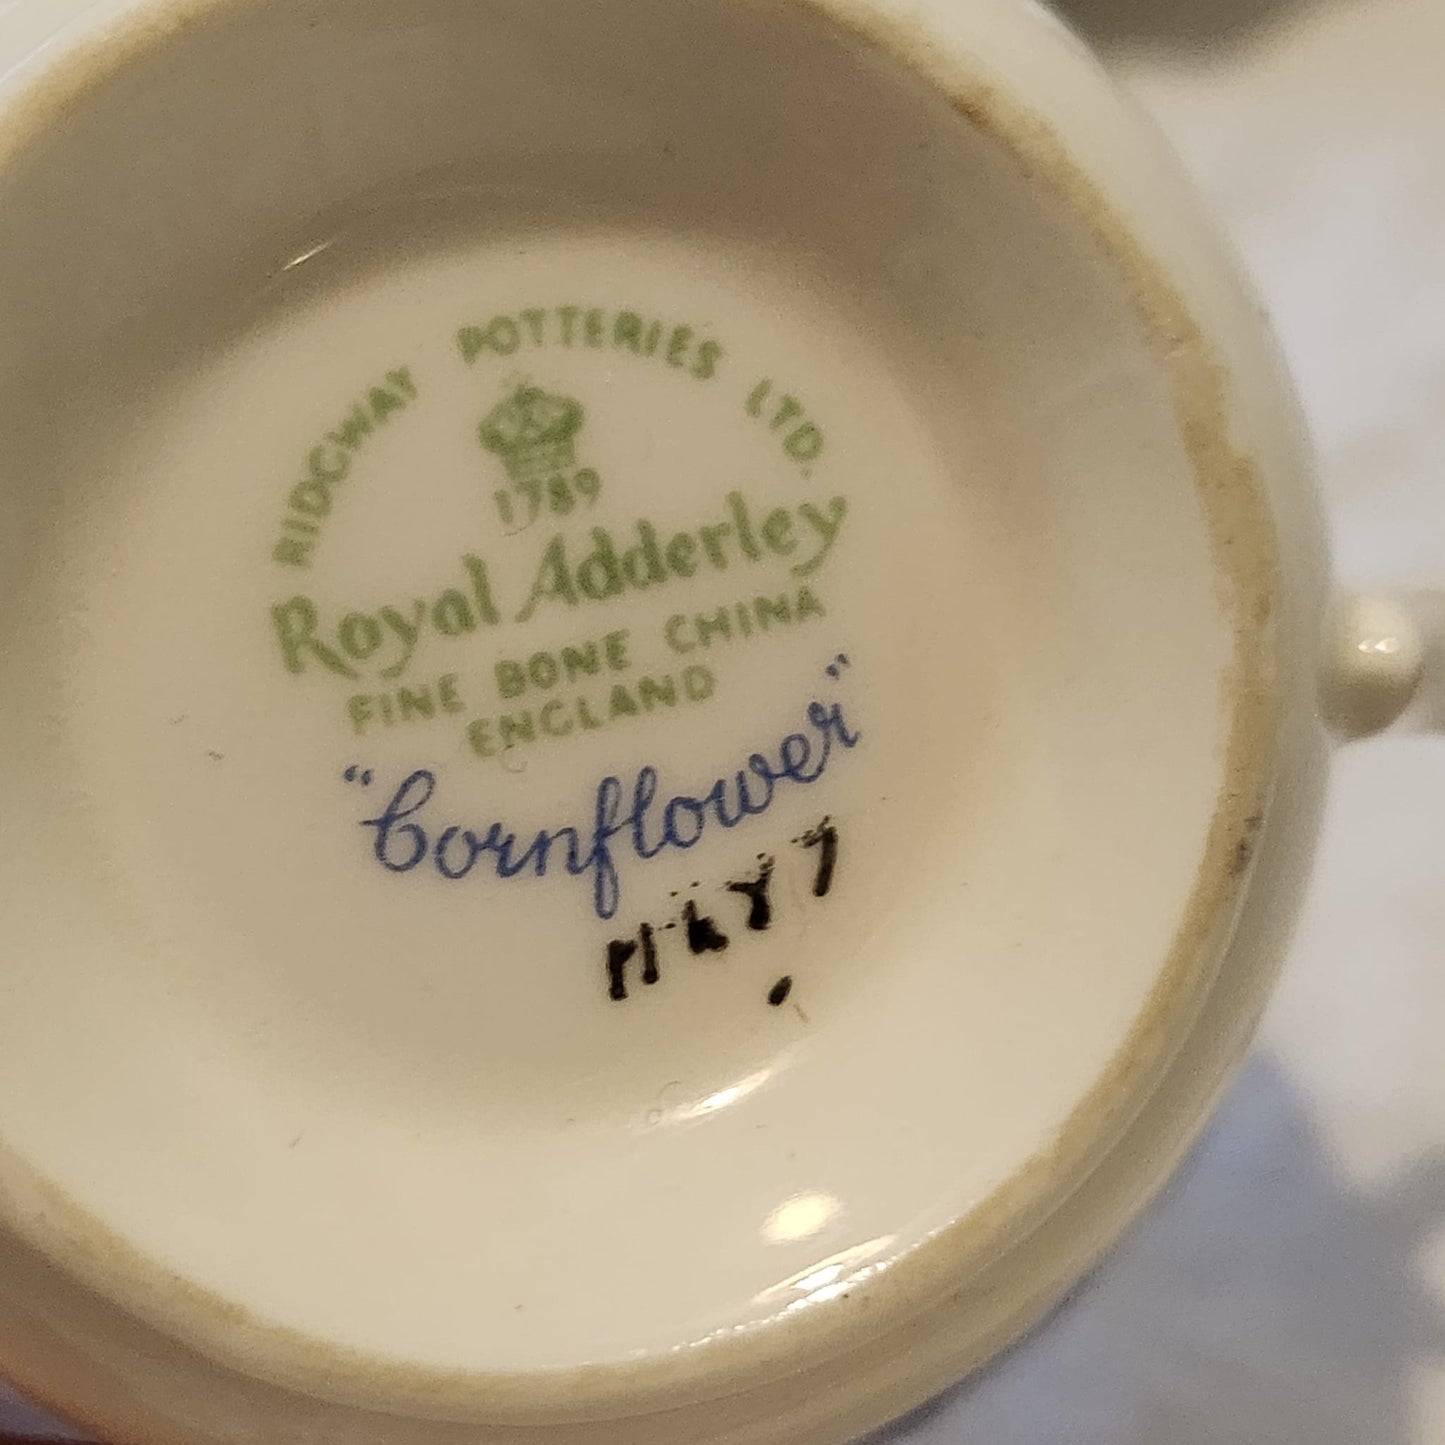 Royal Adderley fine bone china cornflower tea set